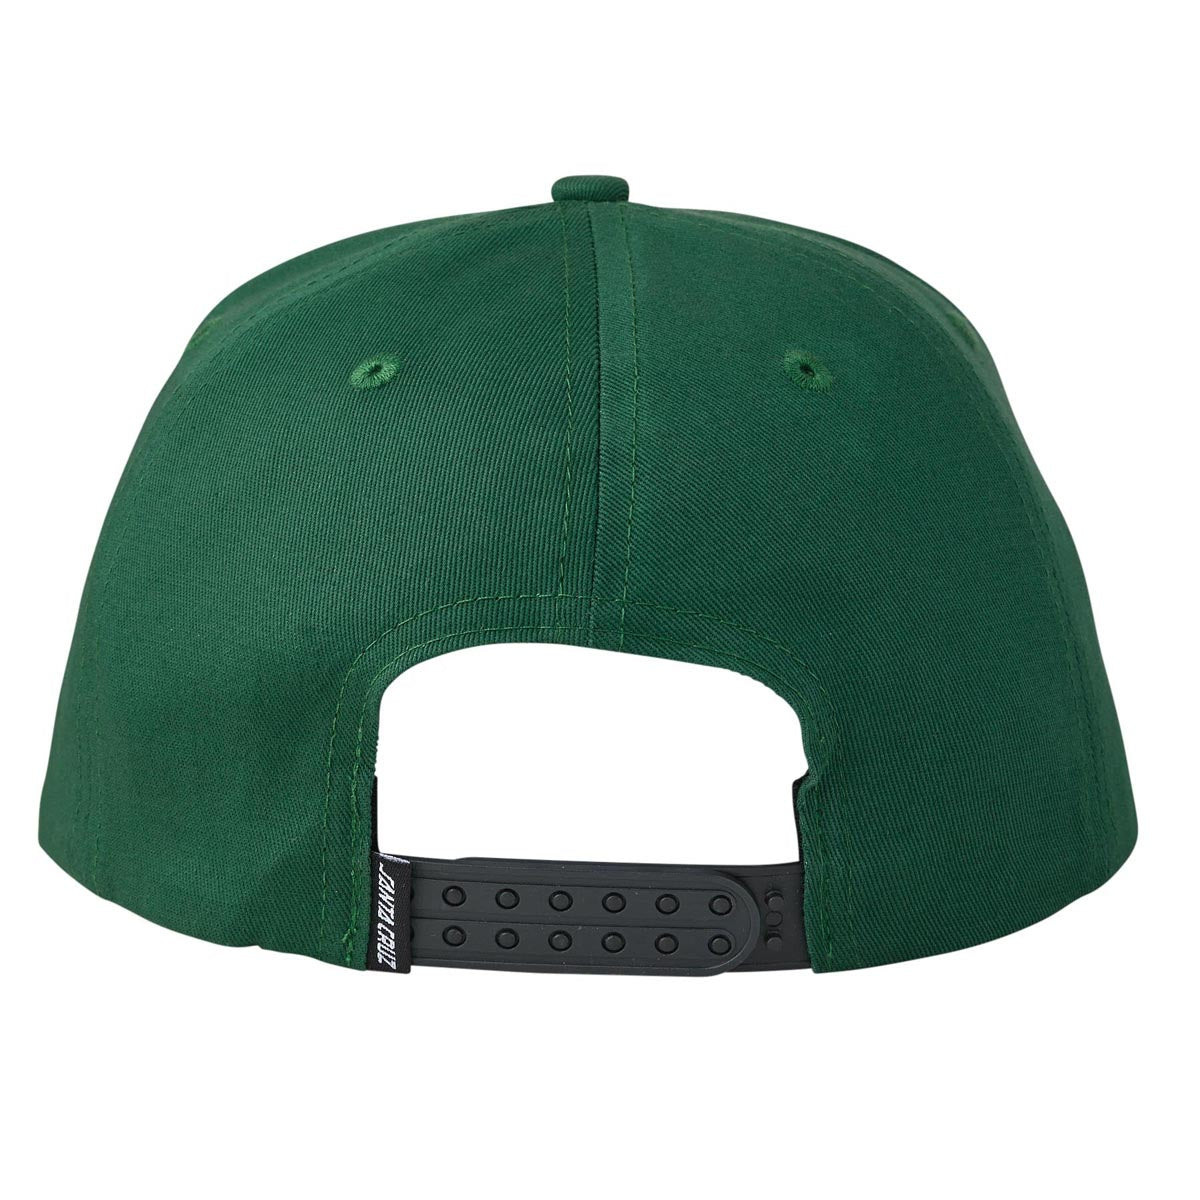 Santa Cruz Dungeon Strip Snapback Hat - Dark Green image 3